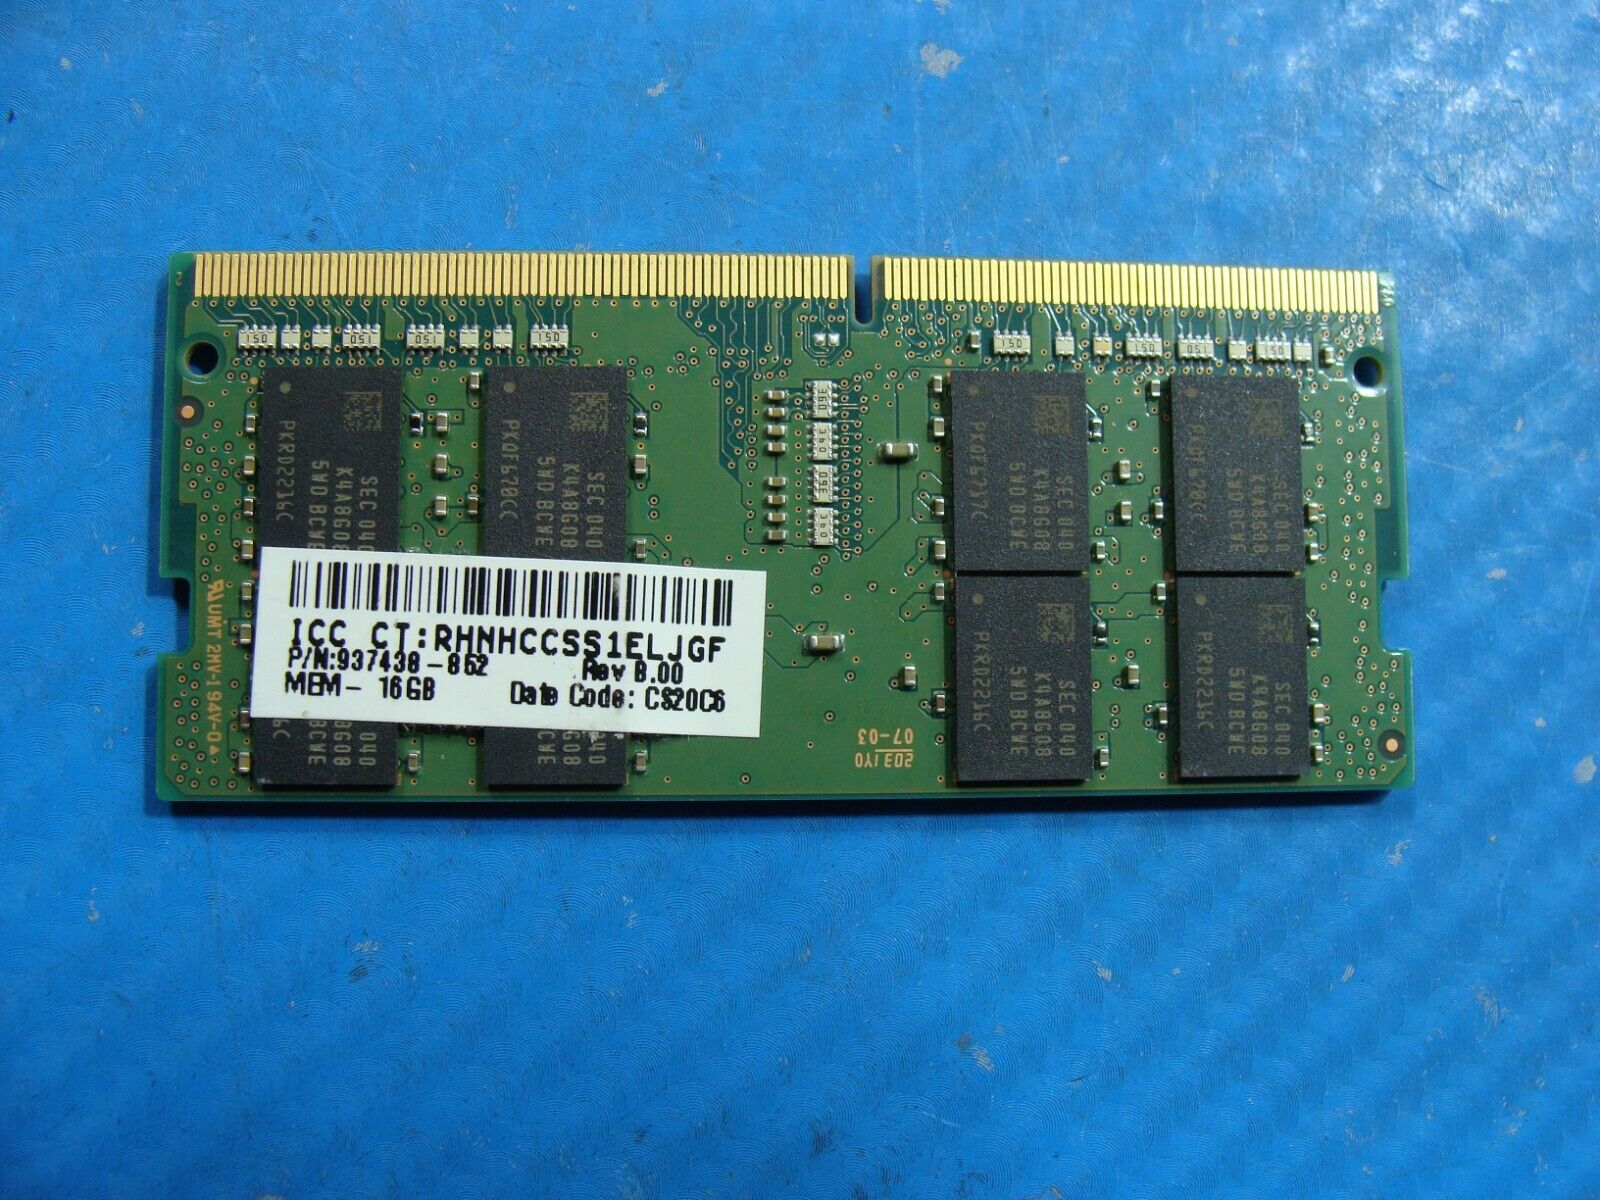 HP 840 G7 Samsung 16GB 2Rx8 PC4-3200AA SO-DIMM Memory RAM M471A2K43DB1-CWE